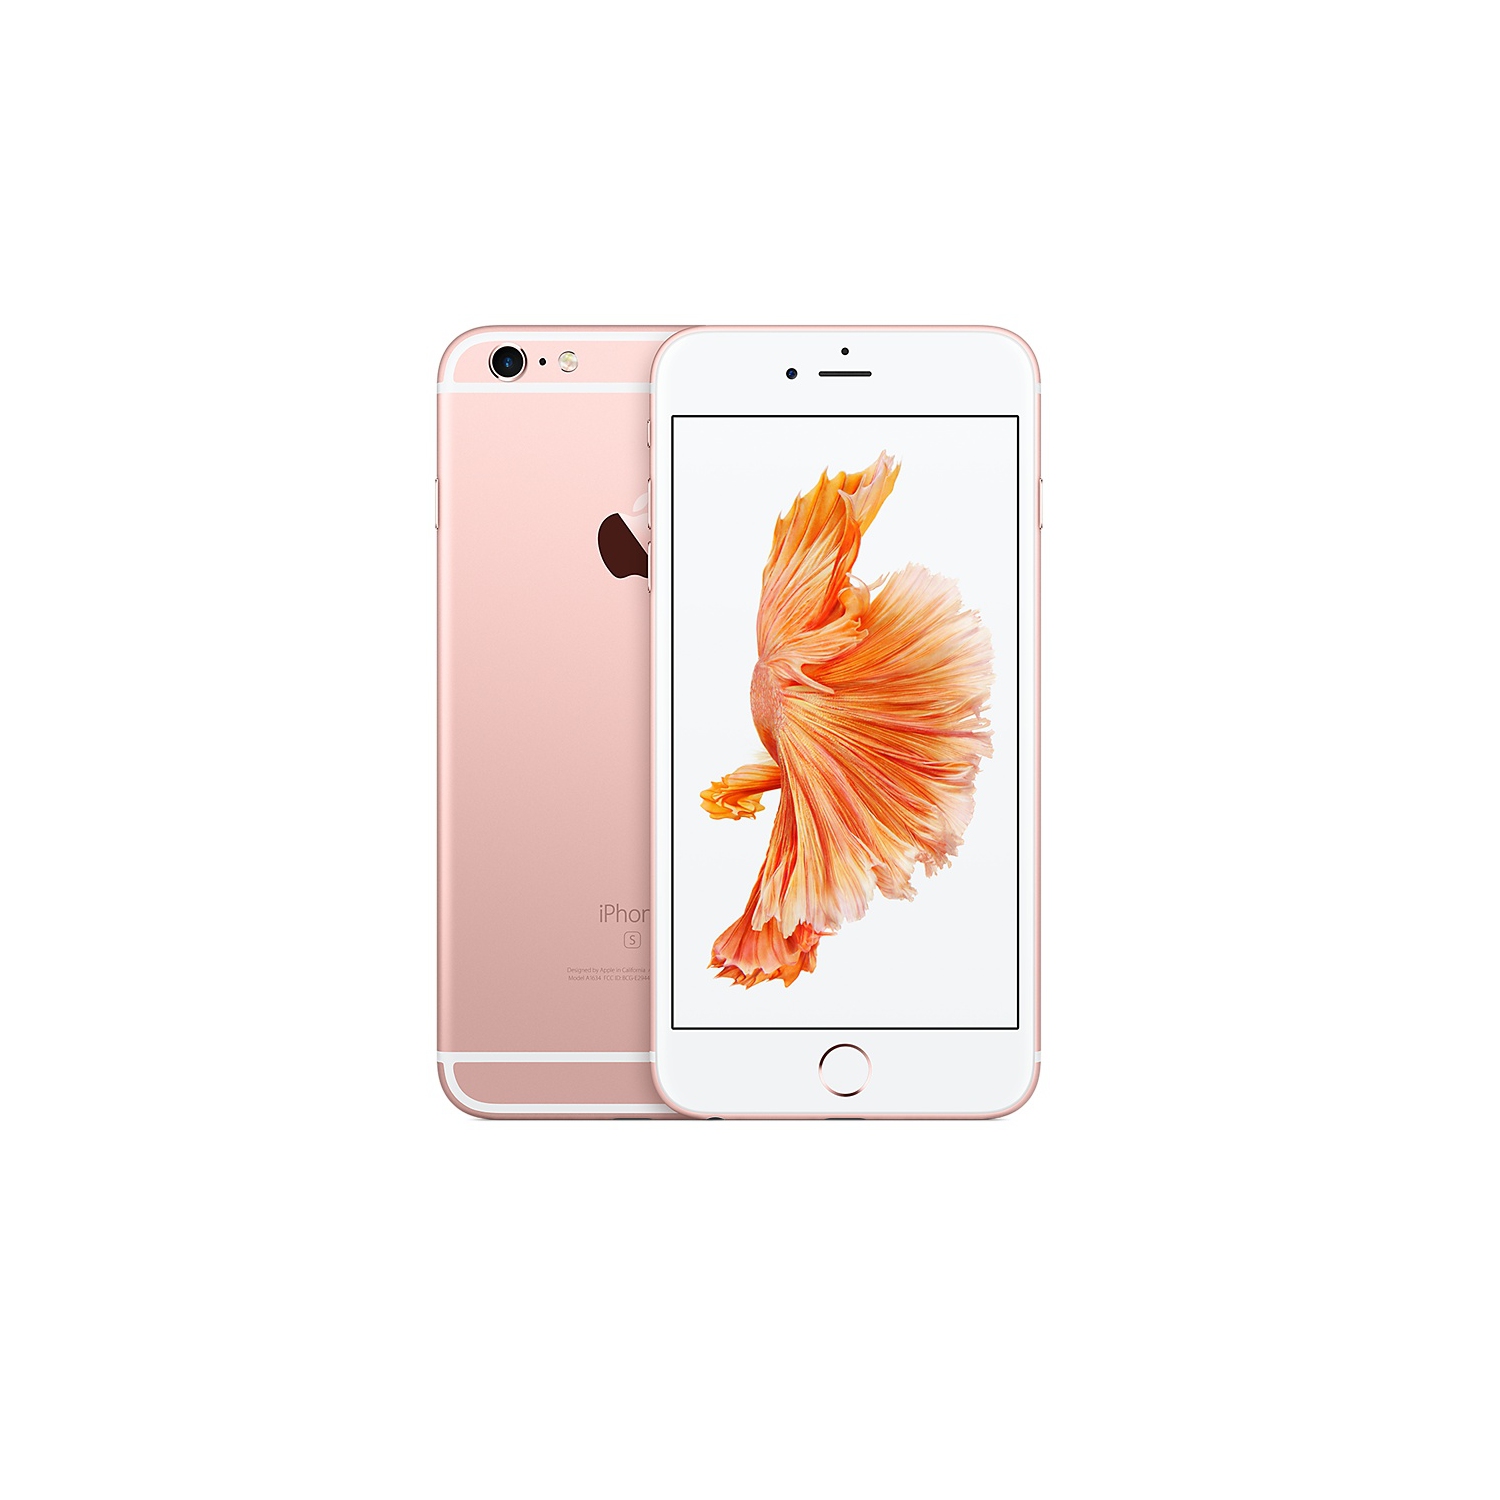 Refurbished (Excellent) - Apple iPhone 6s Plus 32GB Smartphone - Rose Gold - Unlocked - Certified Refurbished